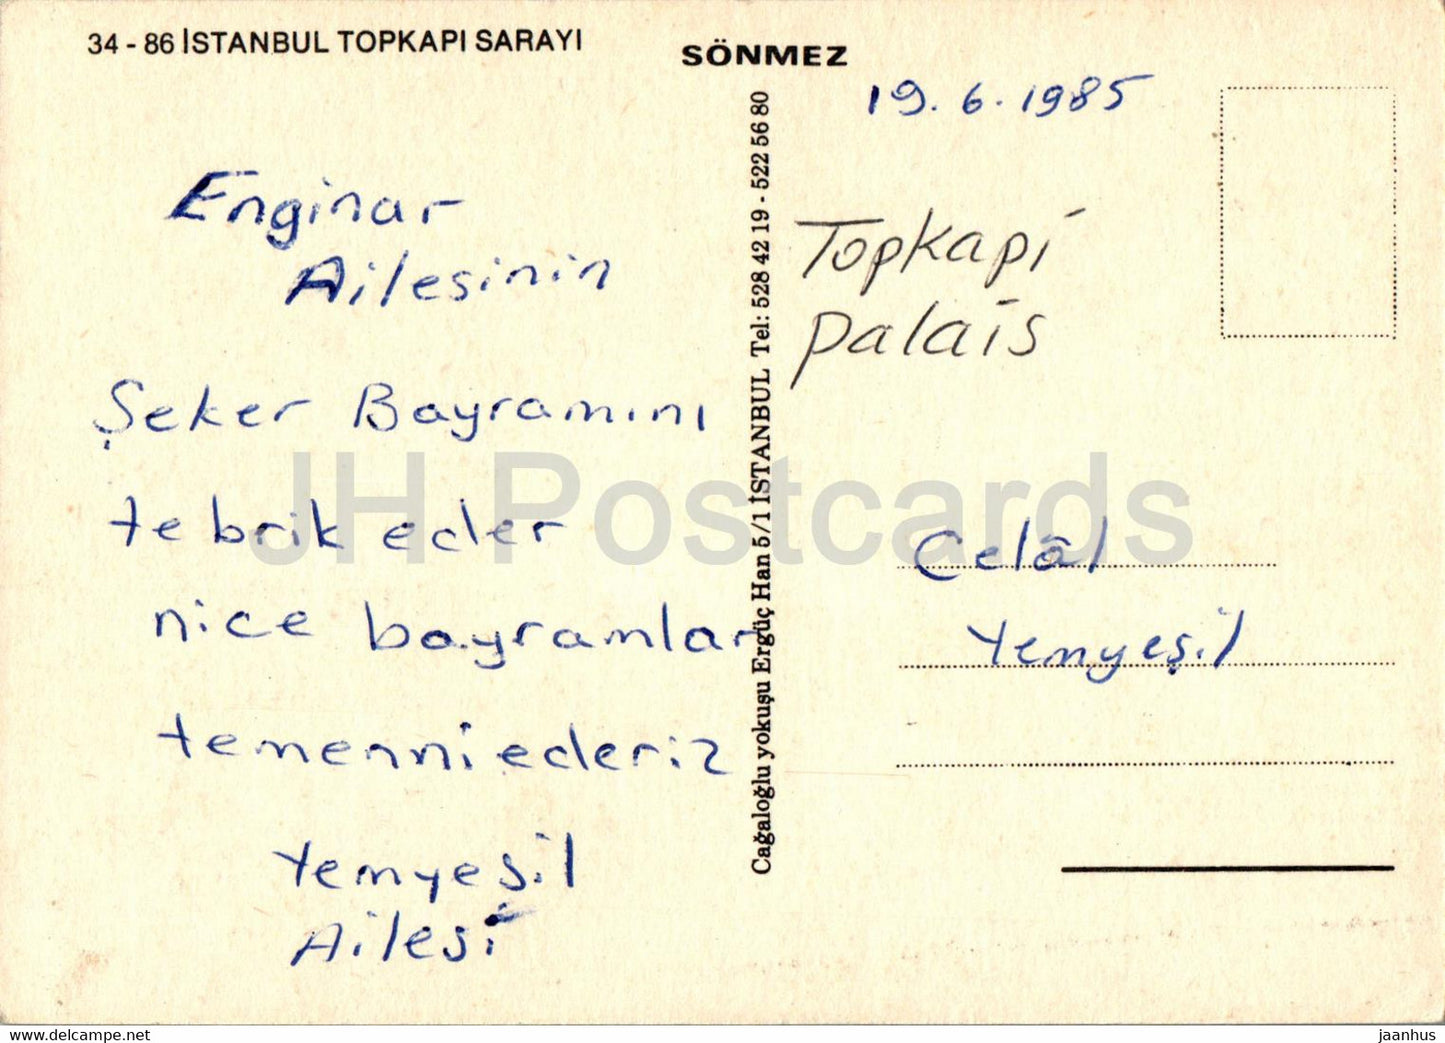 Istanbul - Topkapi Sarayi - palace - 1985 - Turkey - used